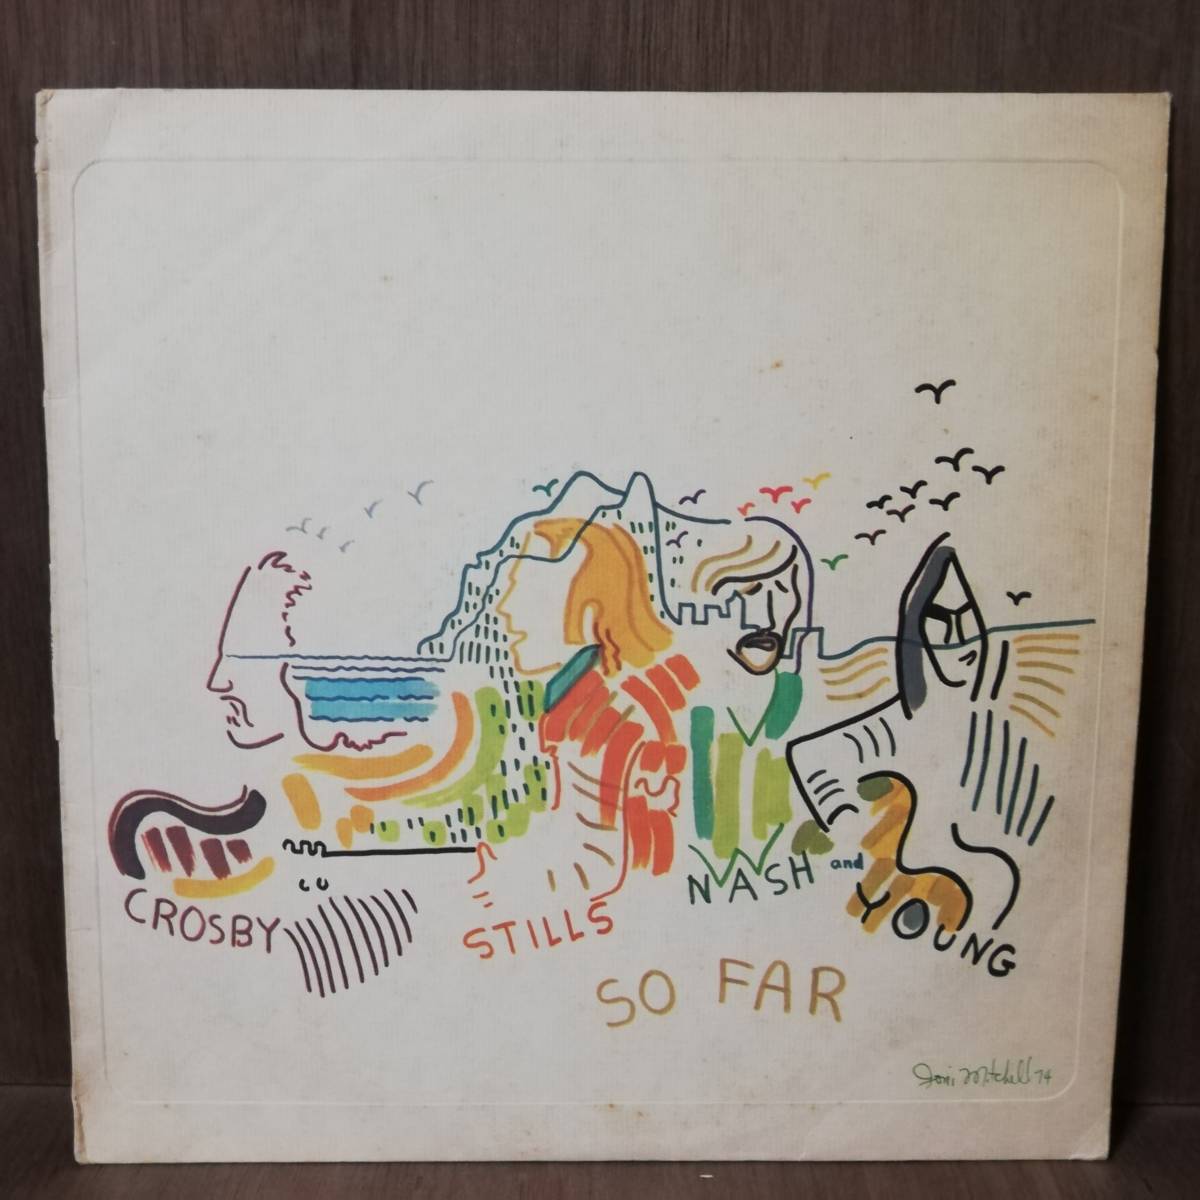 LP - US盤 - Crosby, Stills, Nash & Young - So Far - SD 18100 - *25_画像1